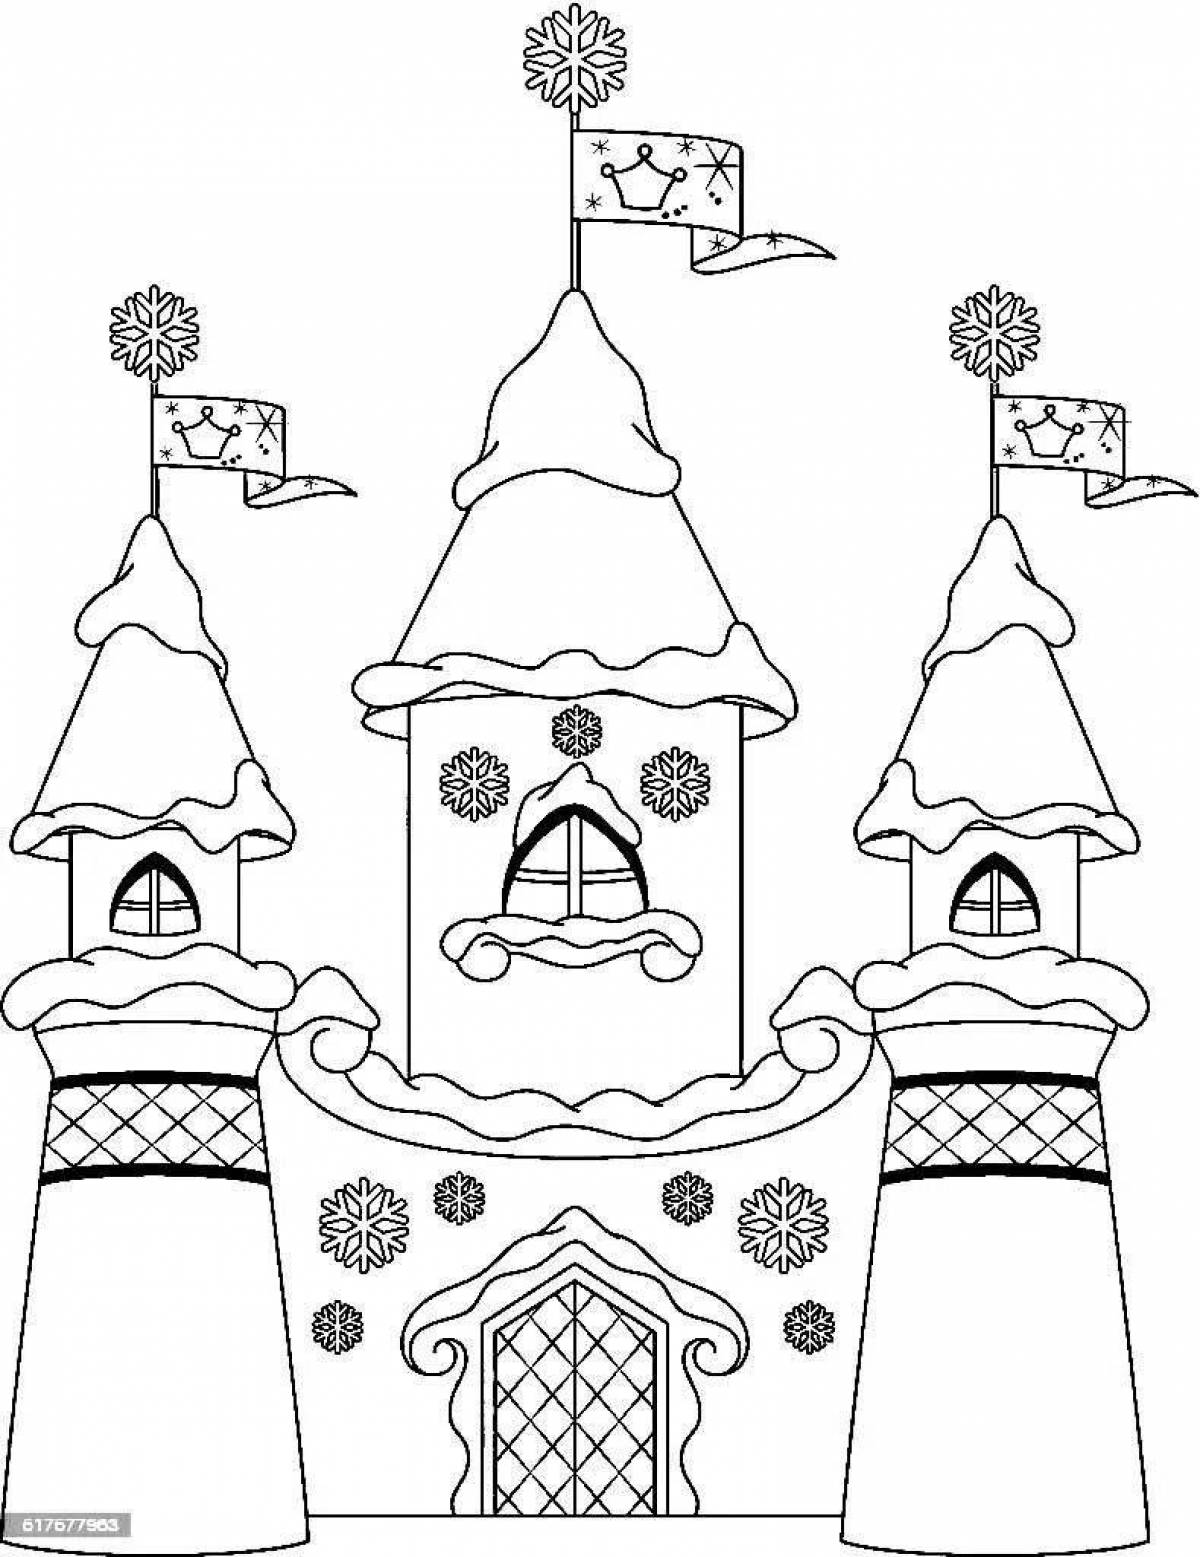 Splendid snow castle coloring book for kids